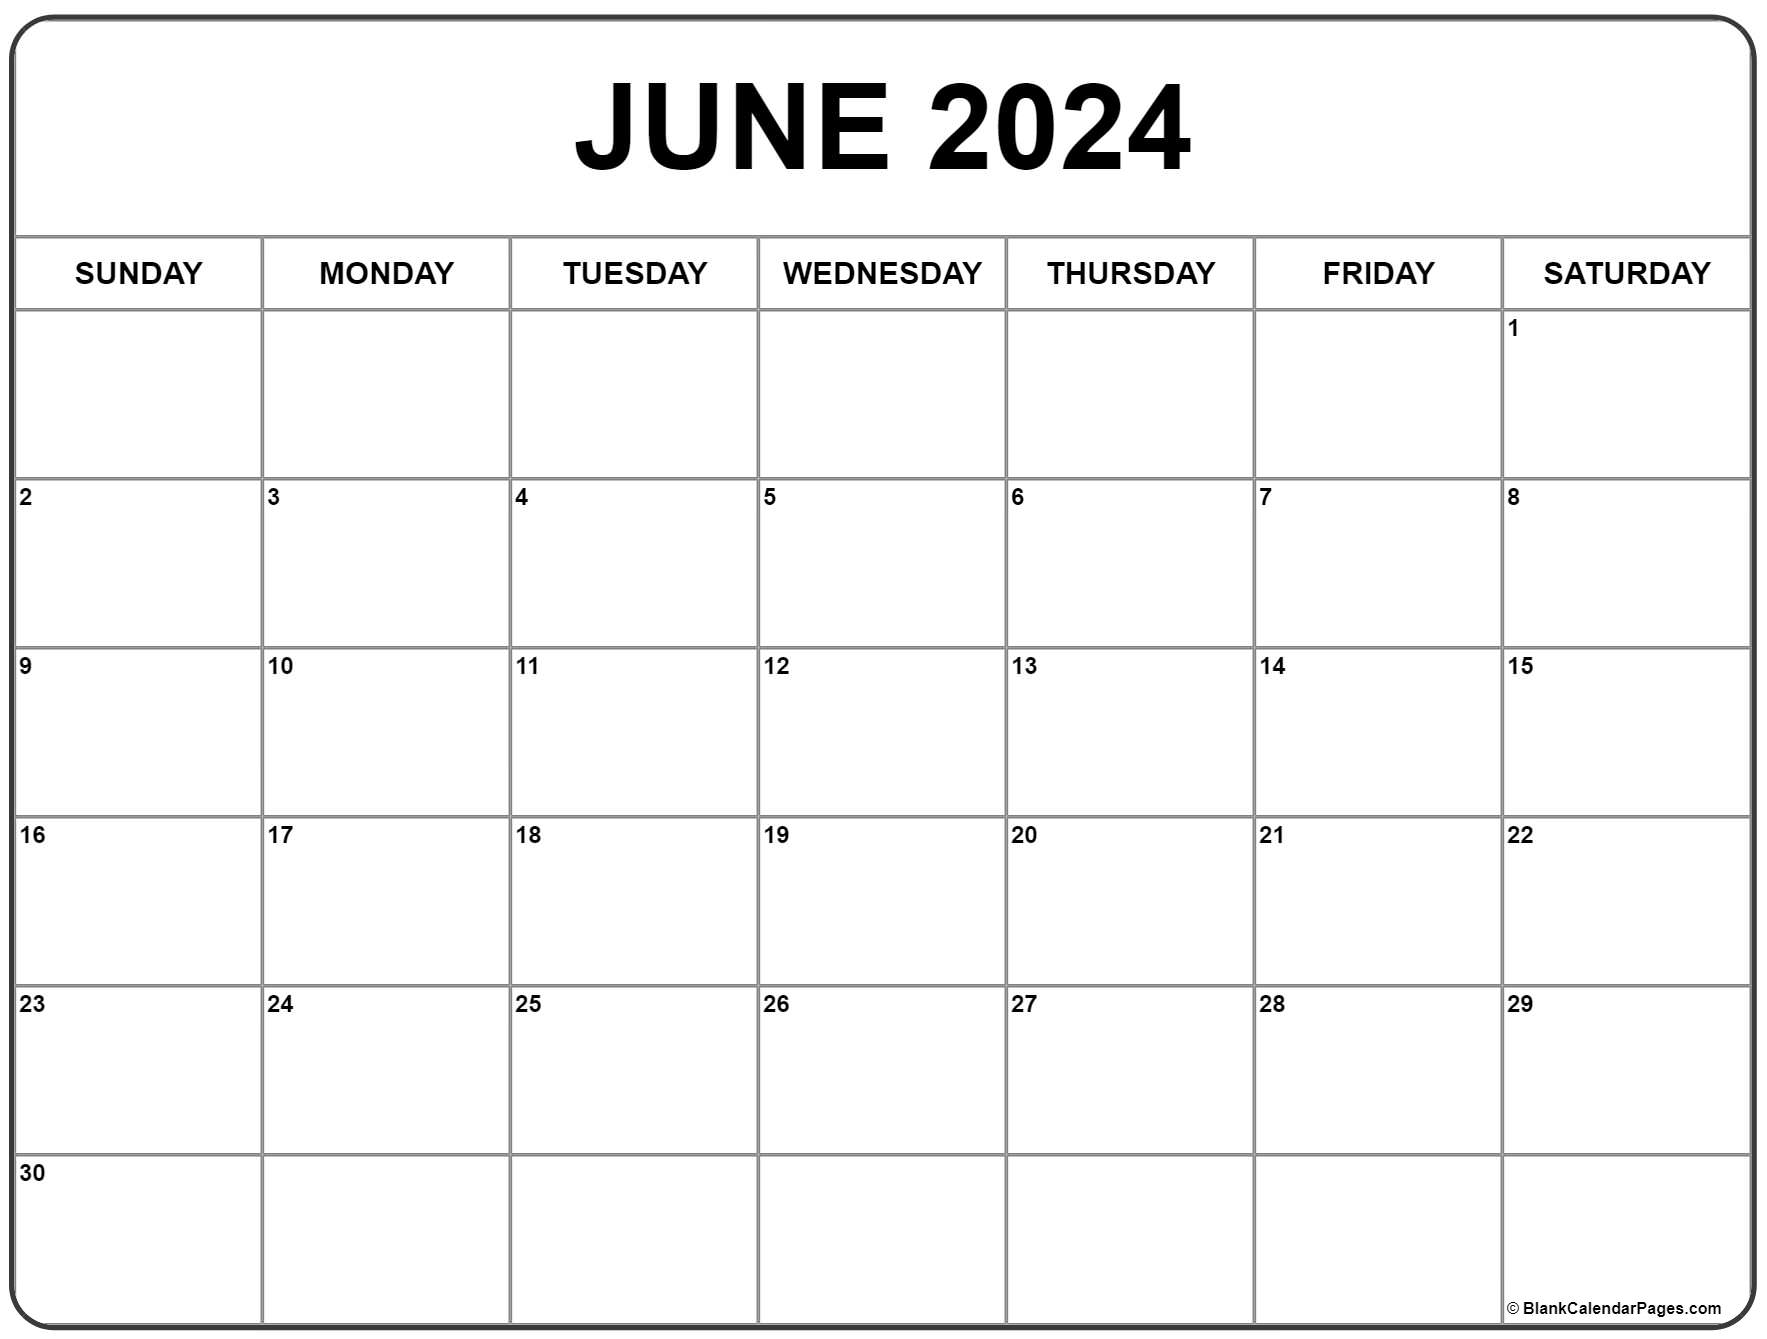 June 2024 Calendar | Free Printable Calendar for Printable Monthly Calendar June 2024